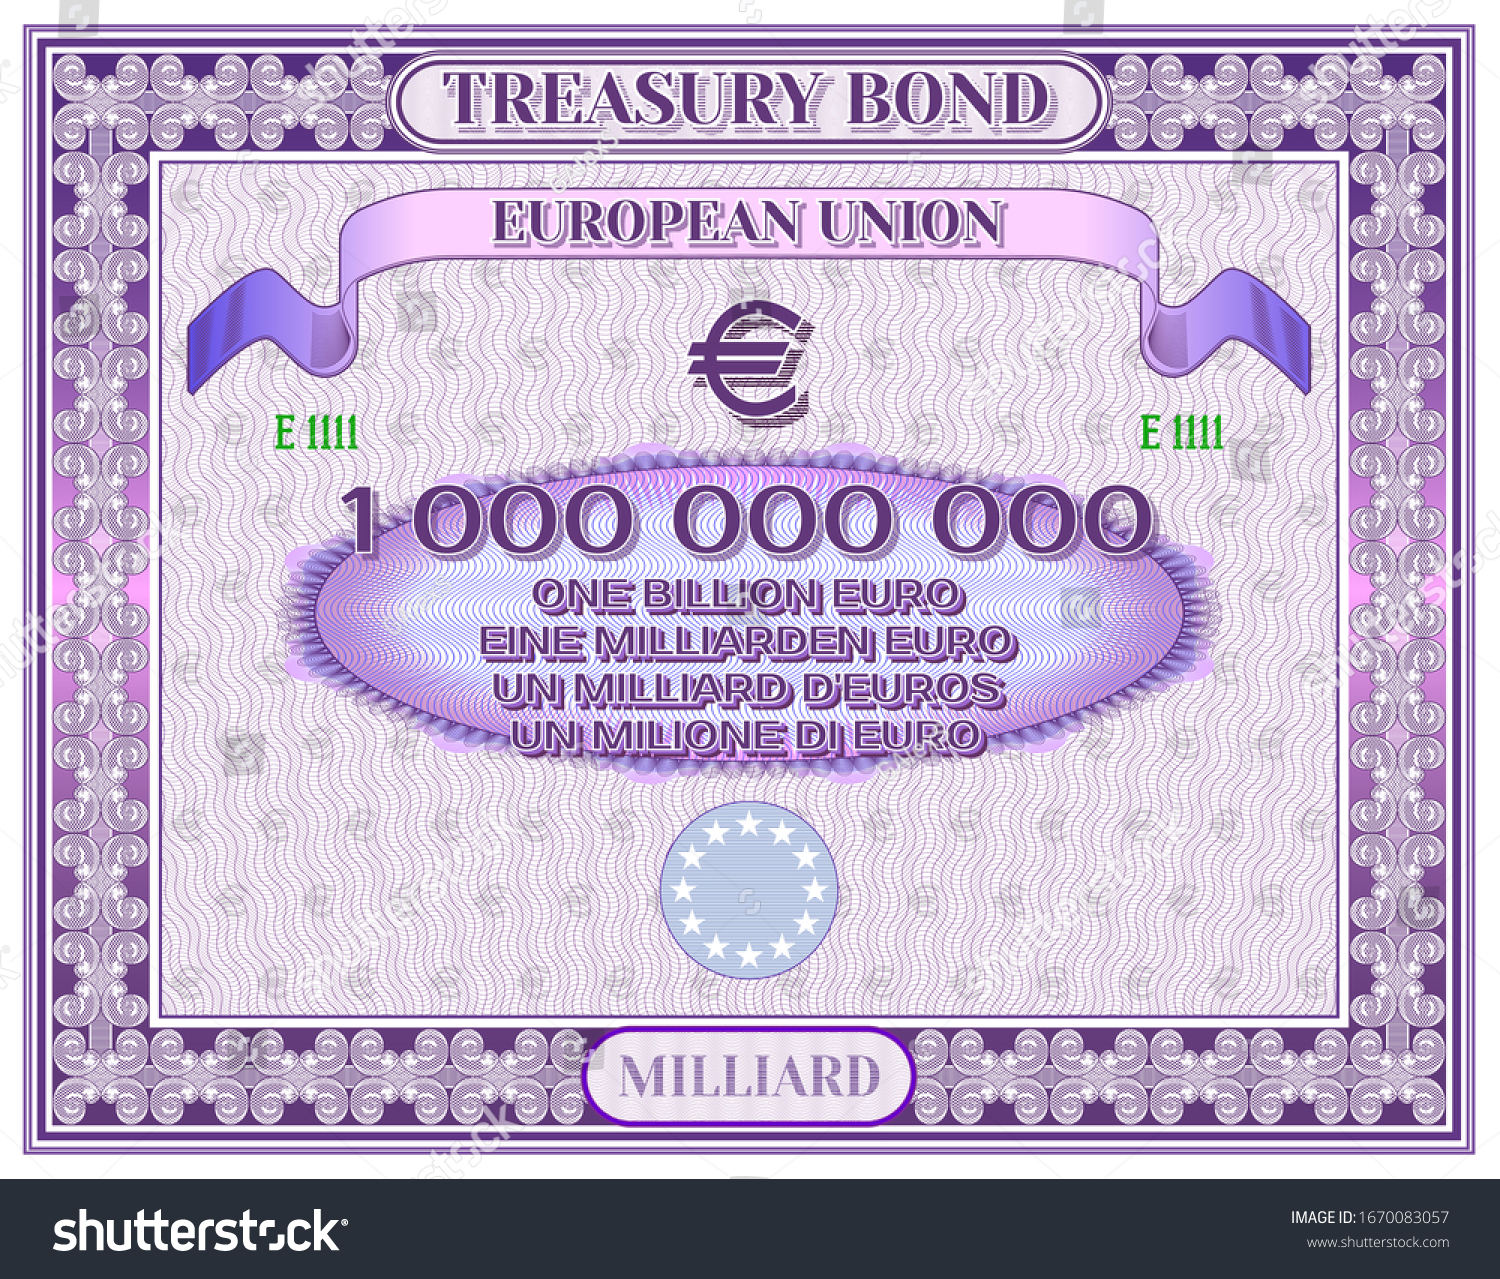 SVG of EU treasury bond in purple frame and guilloche mesh inscription billion euros in German, French and Italian svg